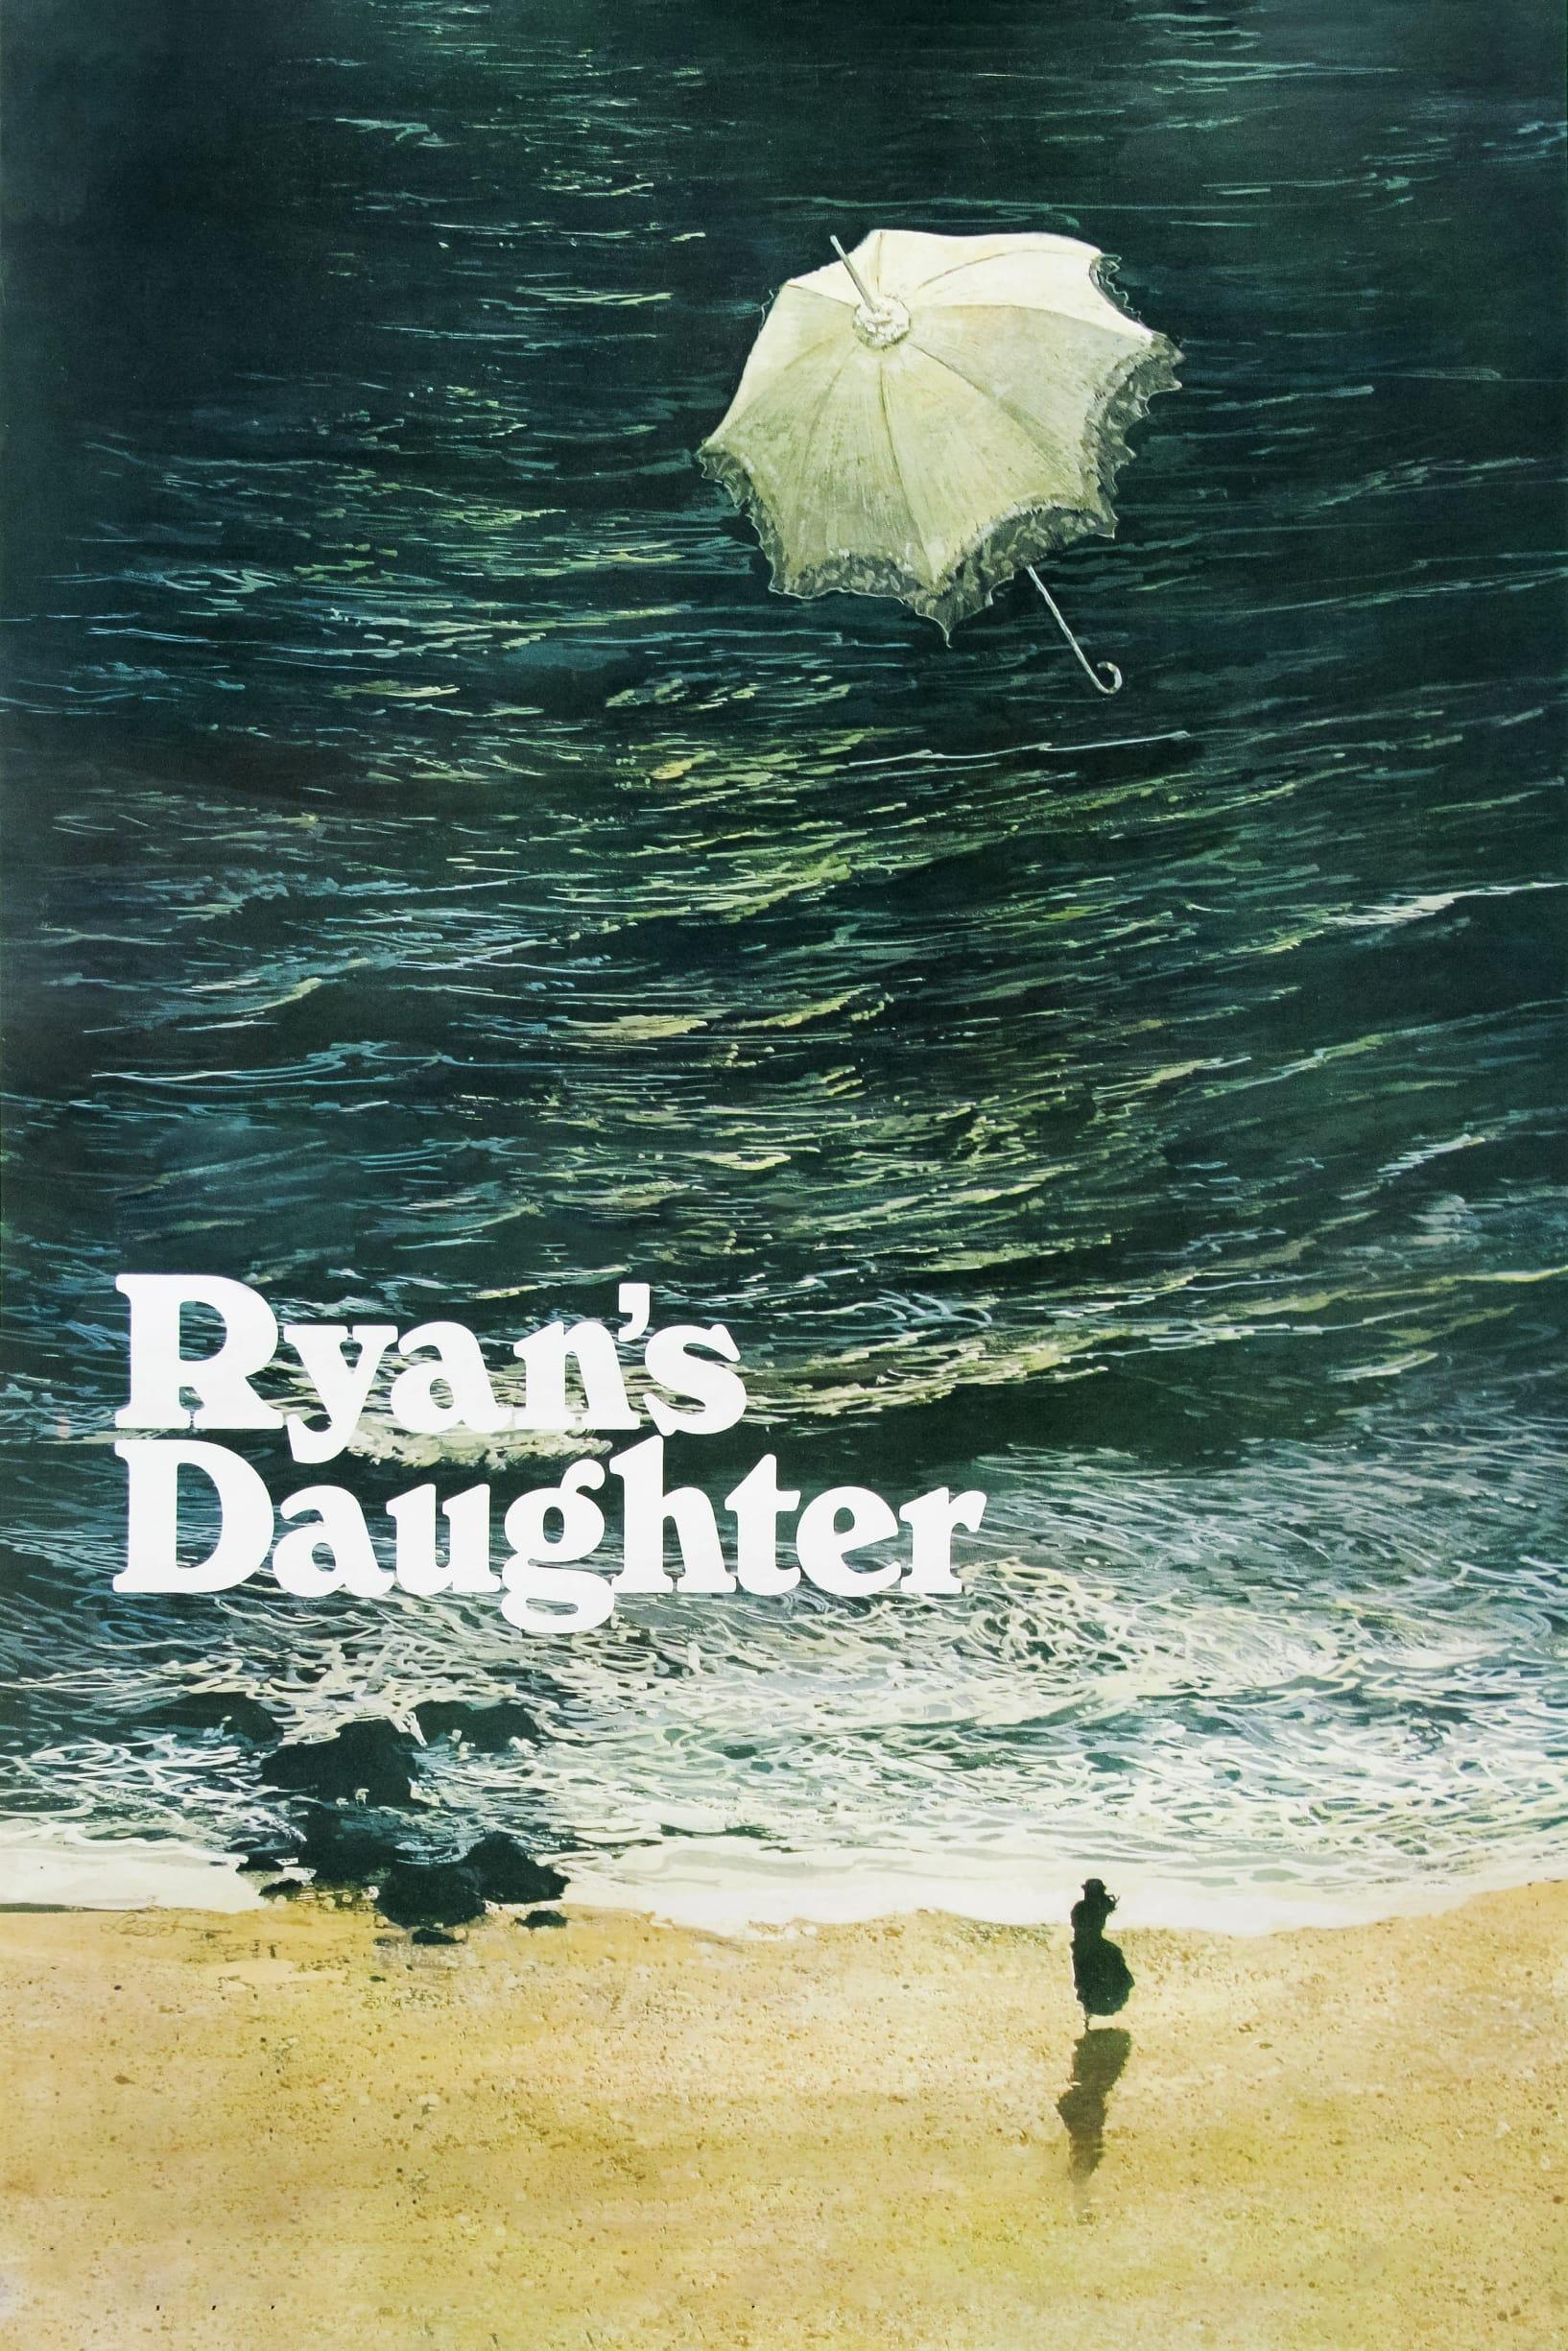 Ryan's Daughter poster